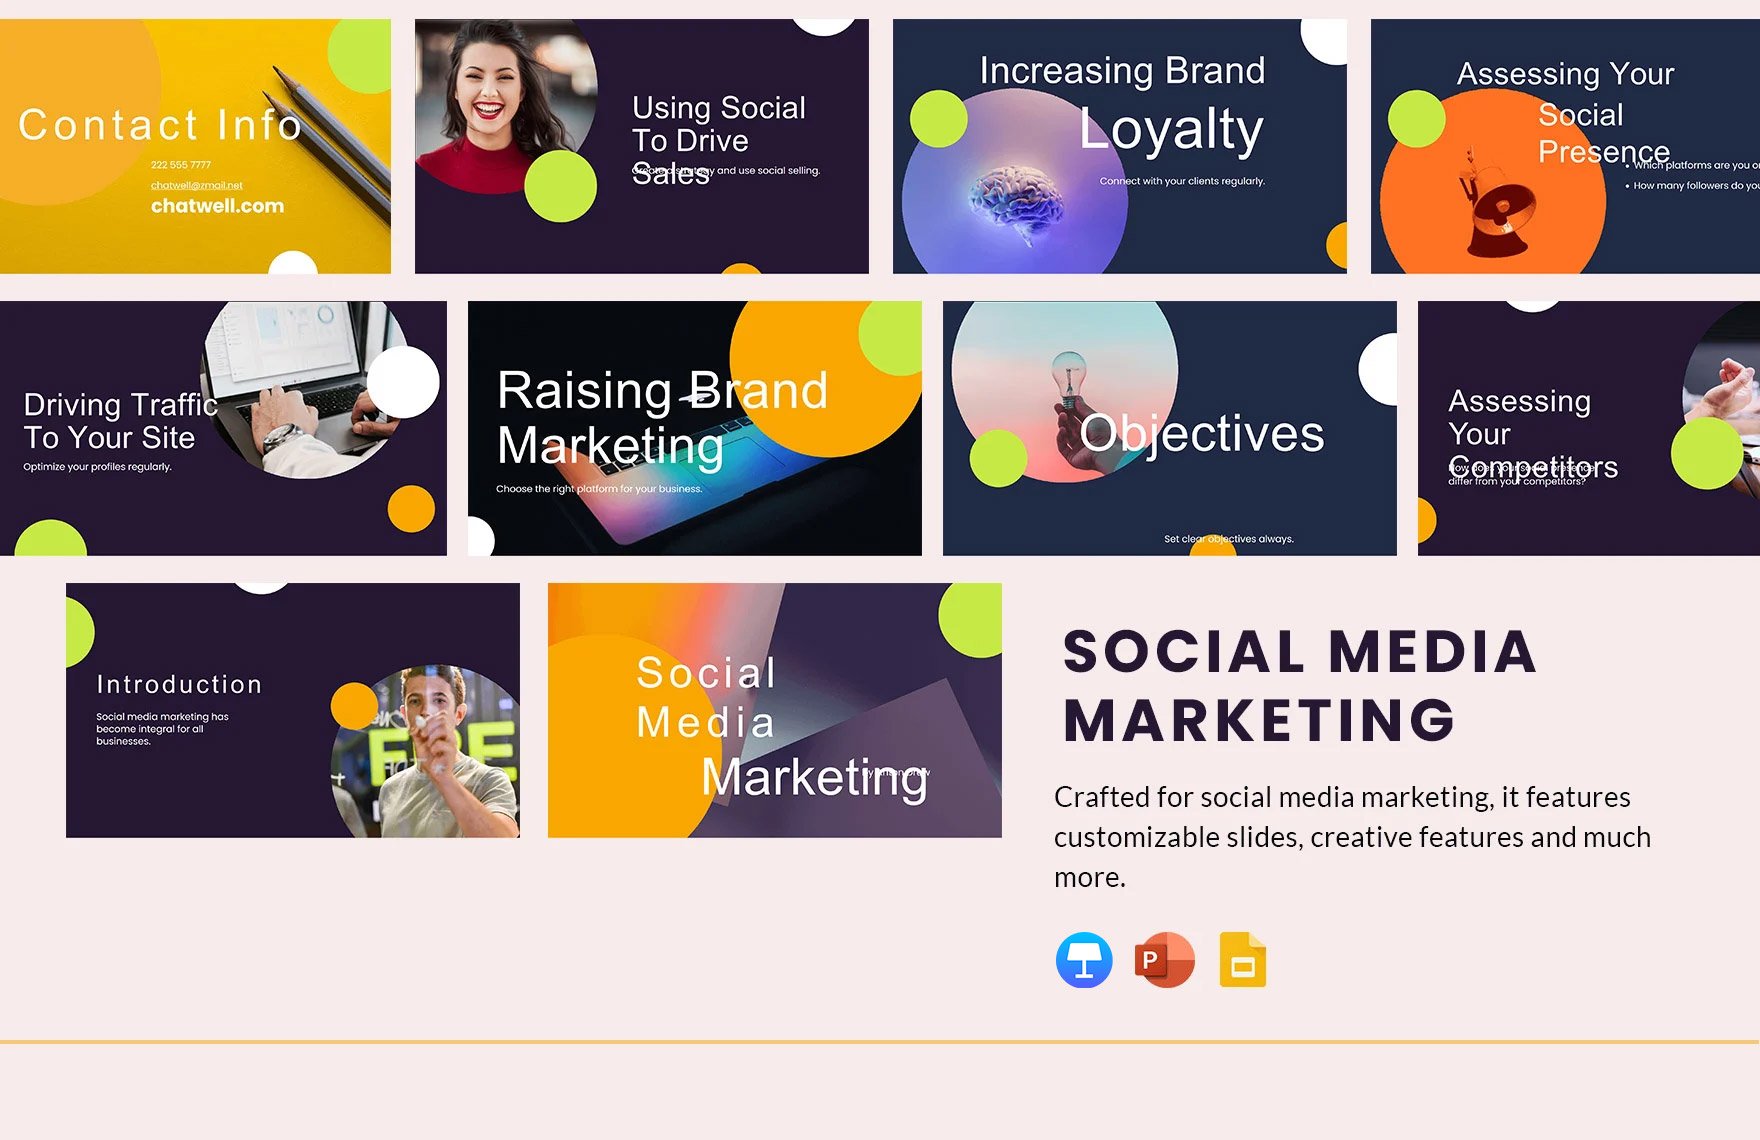 Social Media Marketing Presentation Template